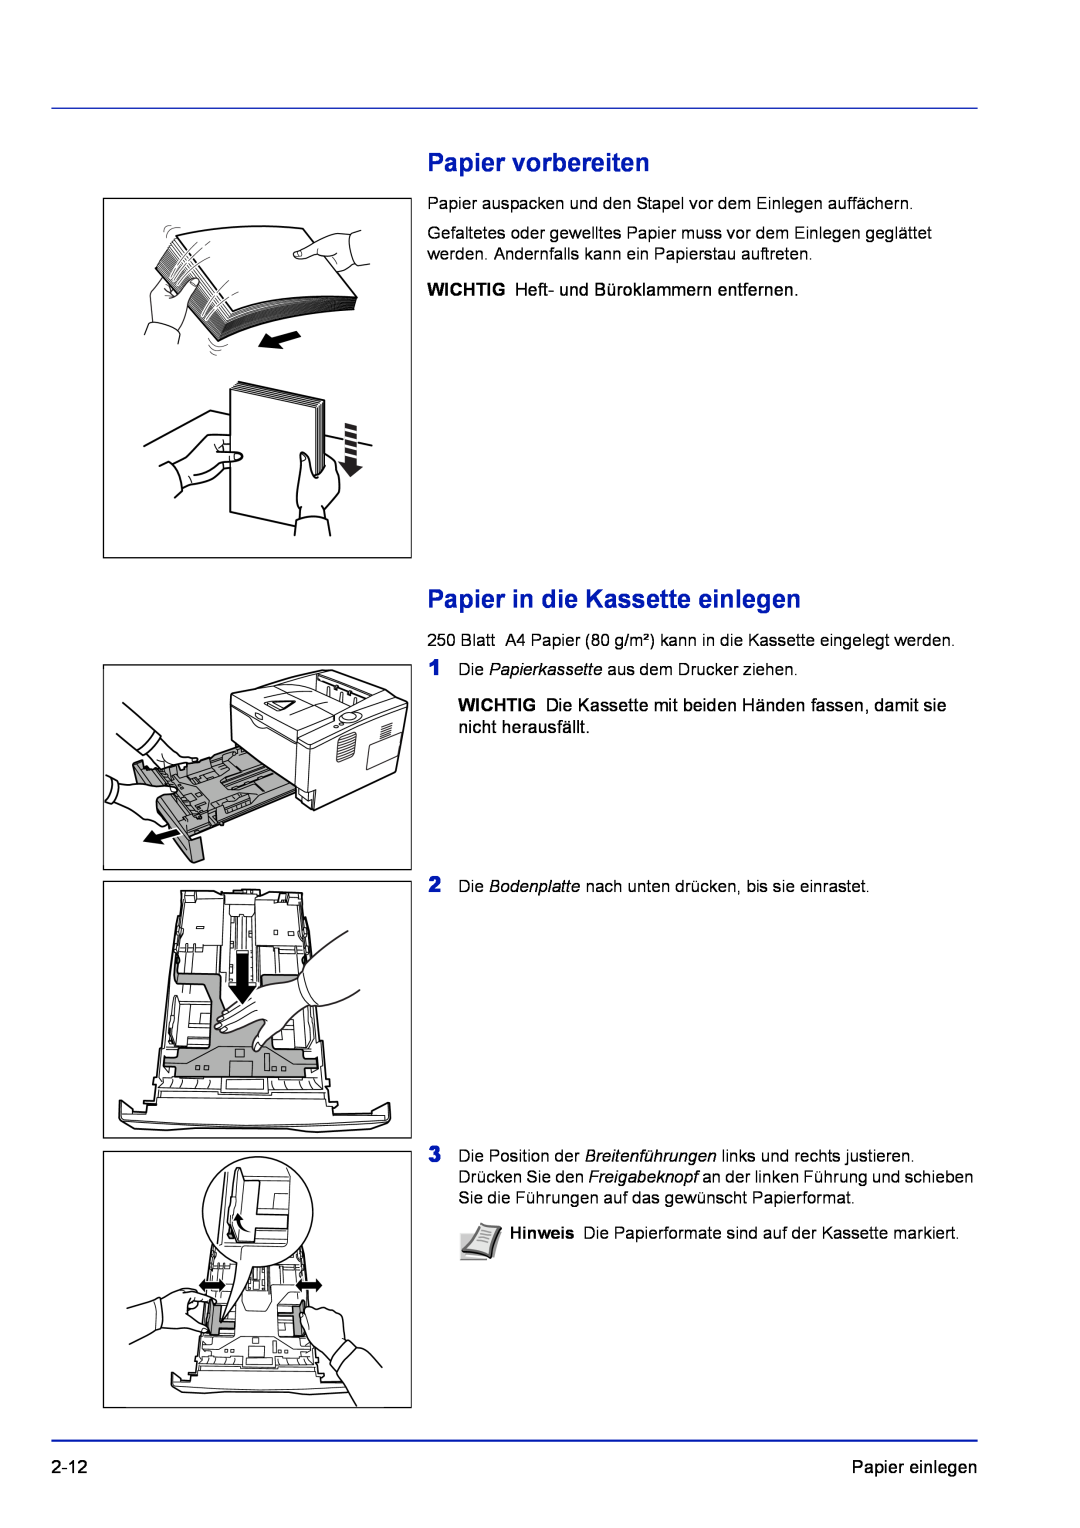 Kyocera FS-1120D, FS-1320D manual Papier vorbereiten, Papier in die Kassette einlegen 